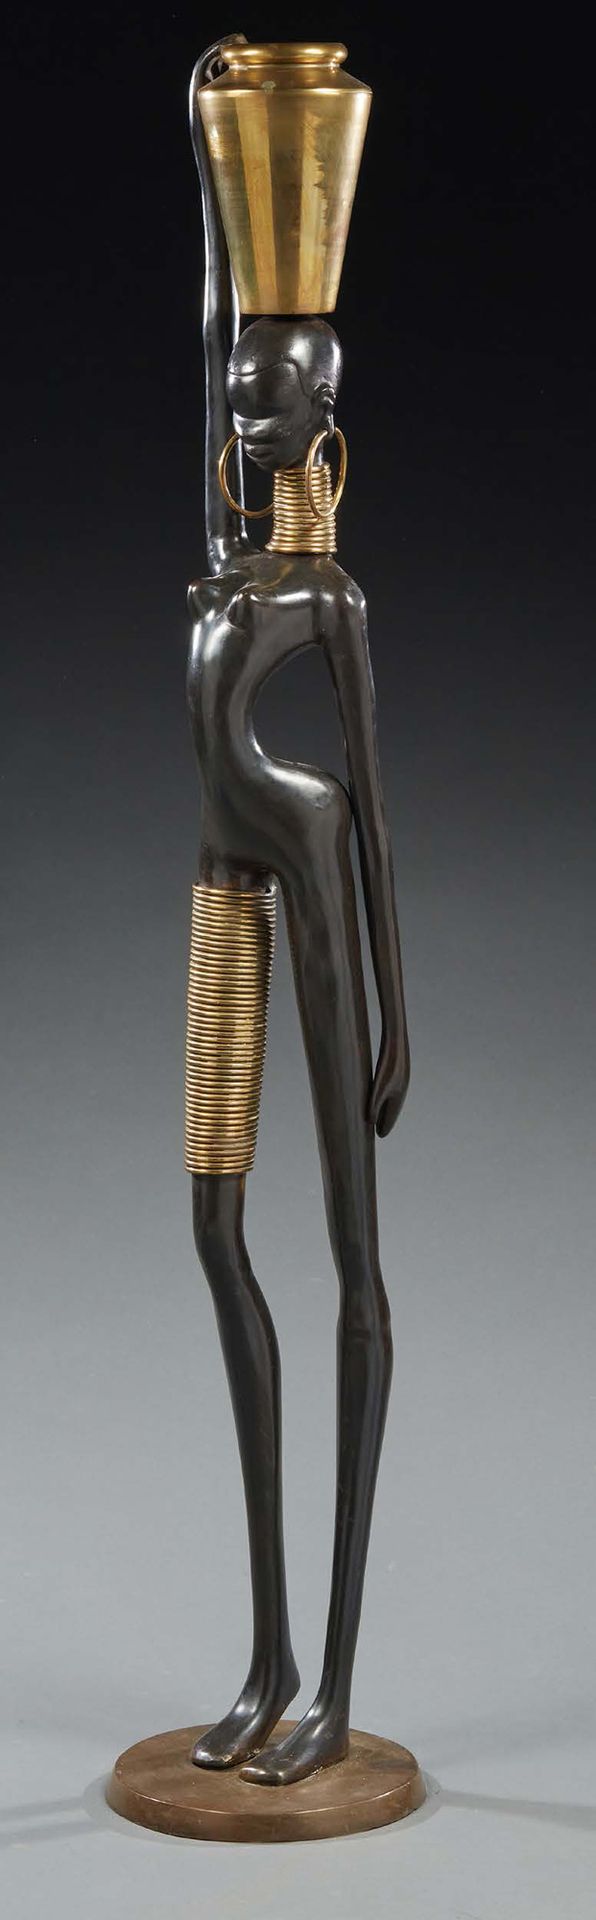 TRAVAIL 1970 非洲妇女的青铜雕塑
H.166厘米